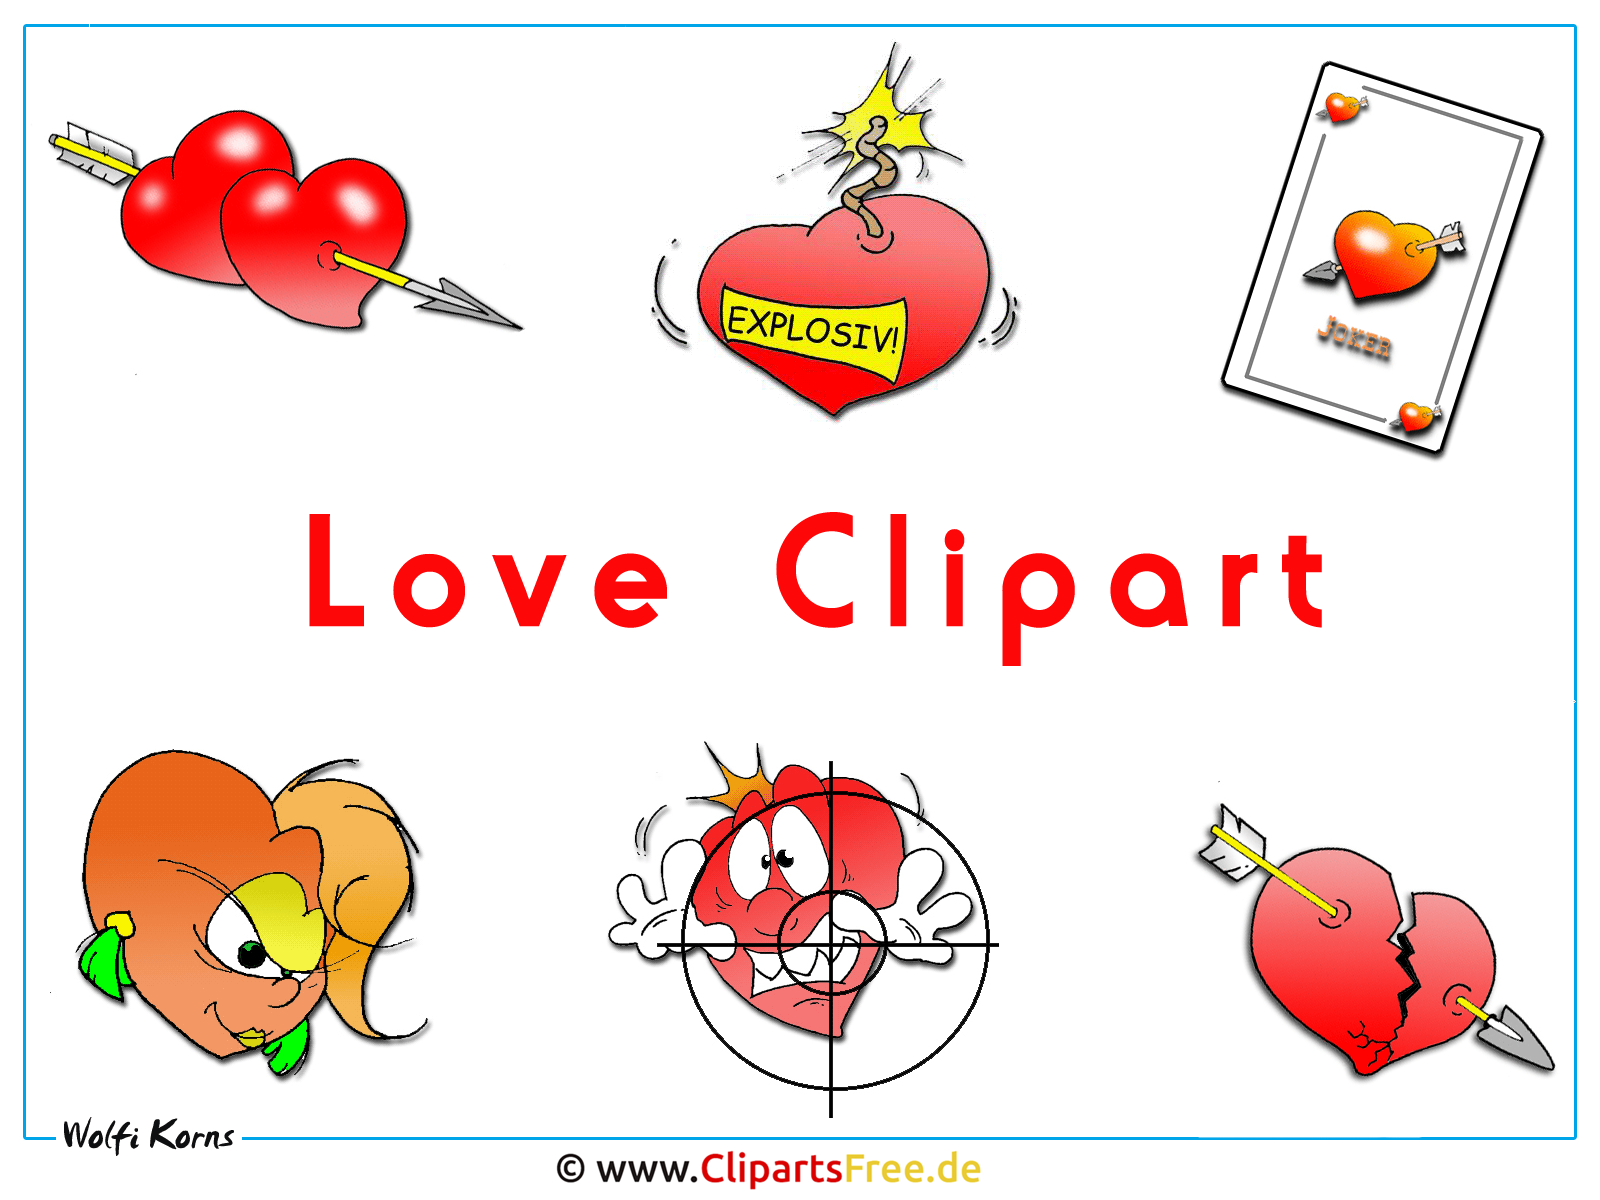 clipart free download kostenlos - photo #10